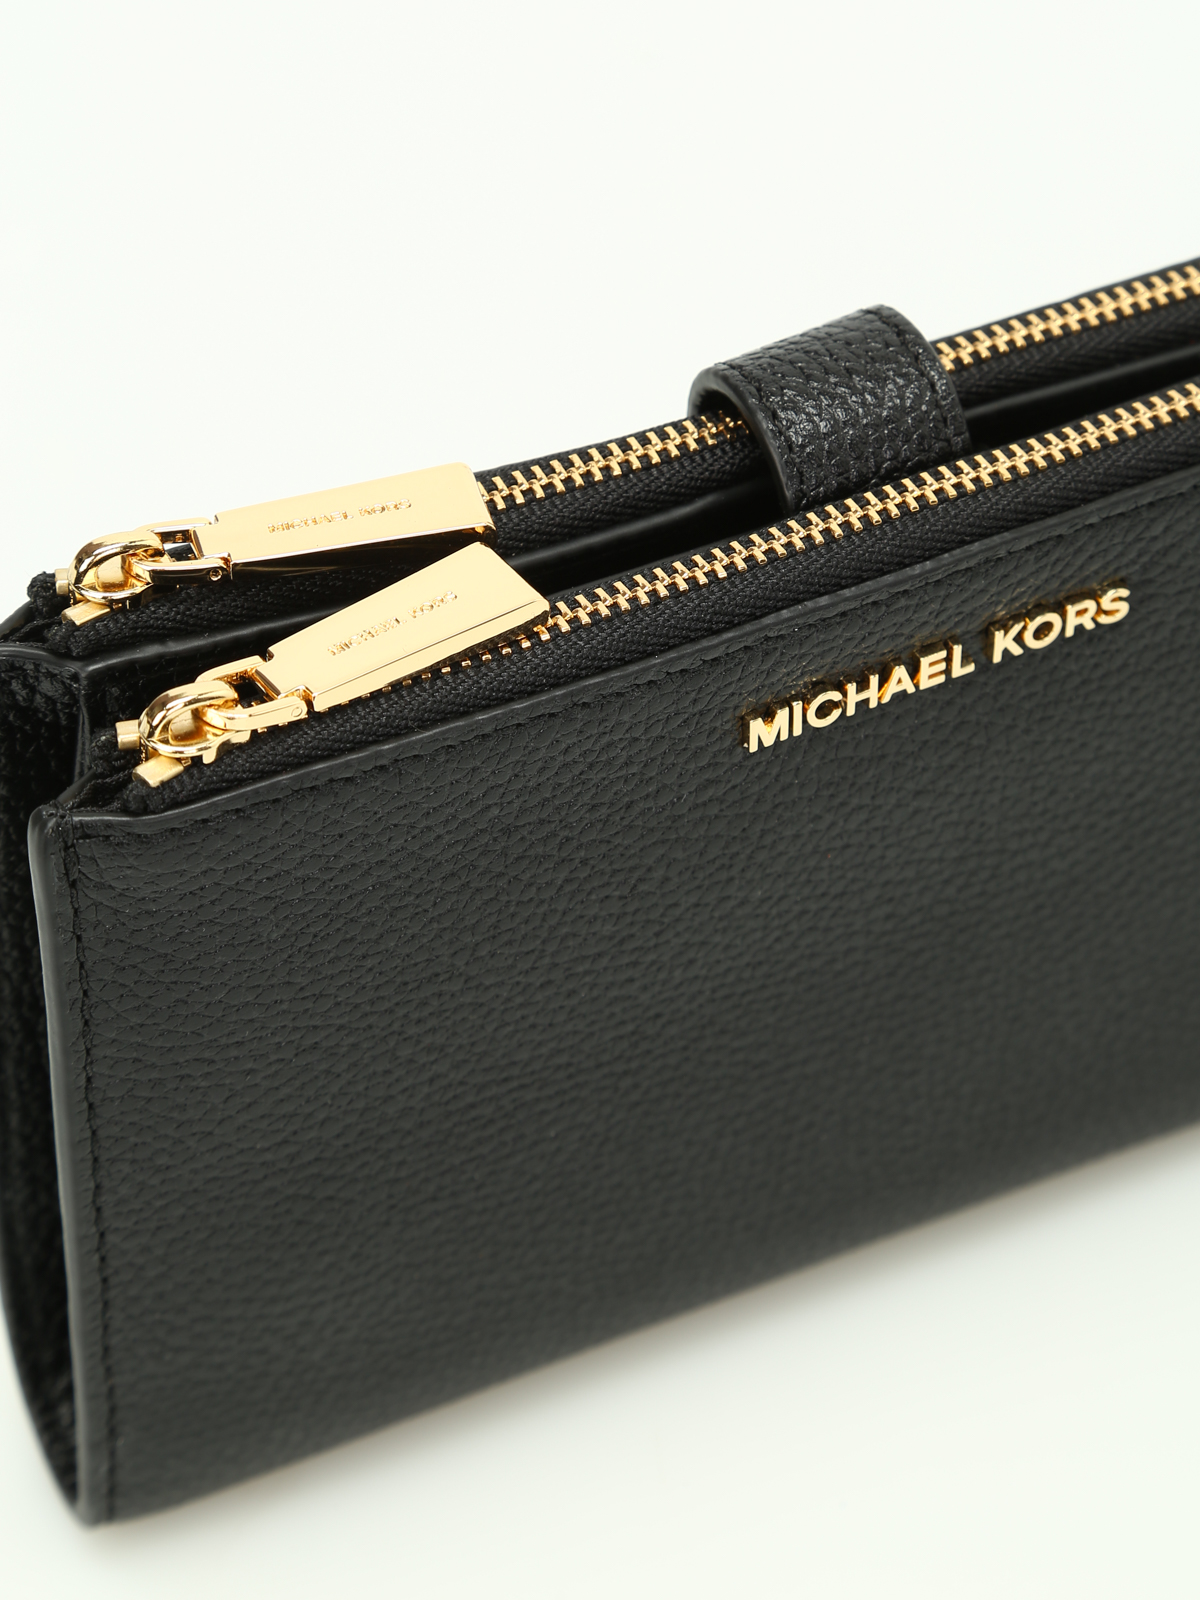 New Michael Kors Black Leather Gold Double Zip Wallet Wristlet